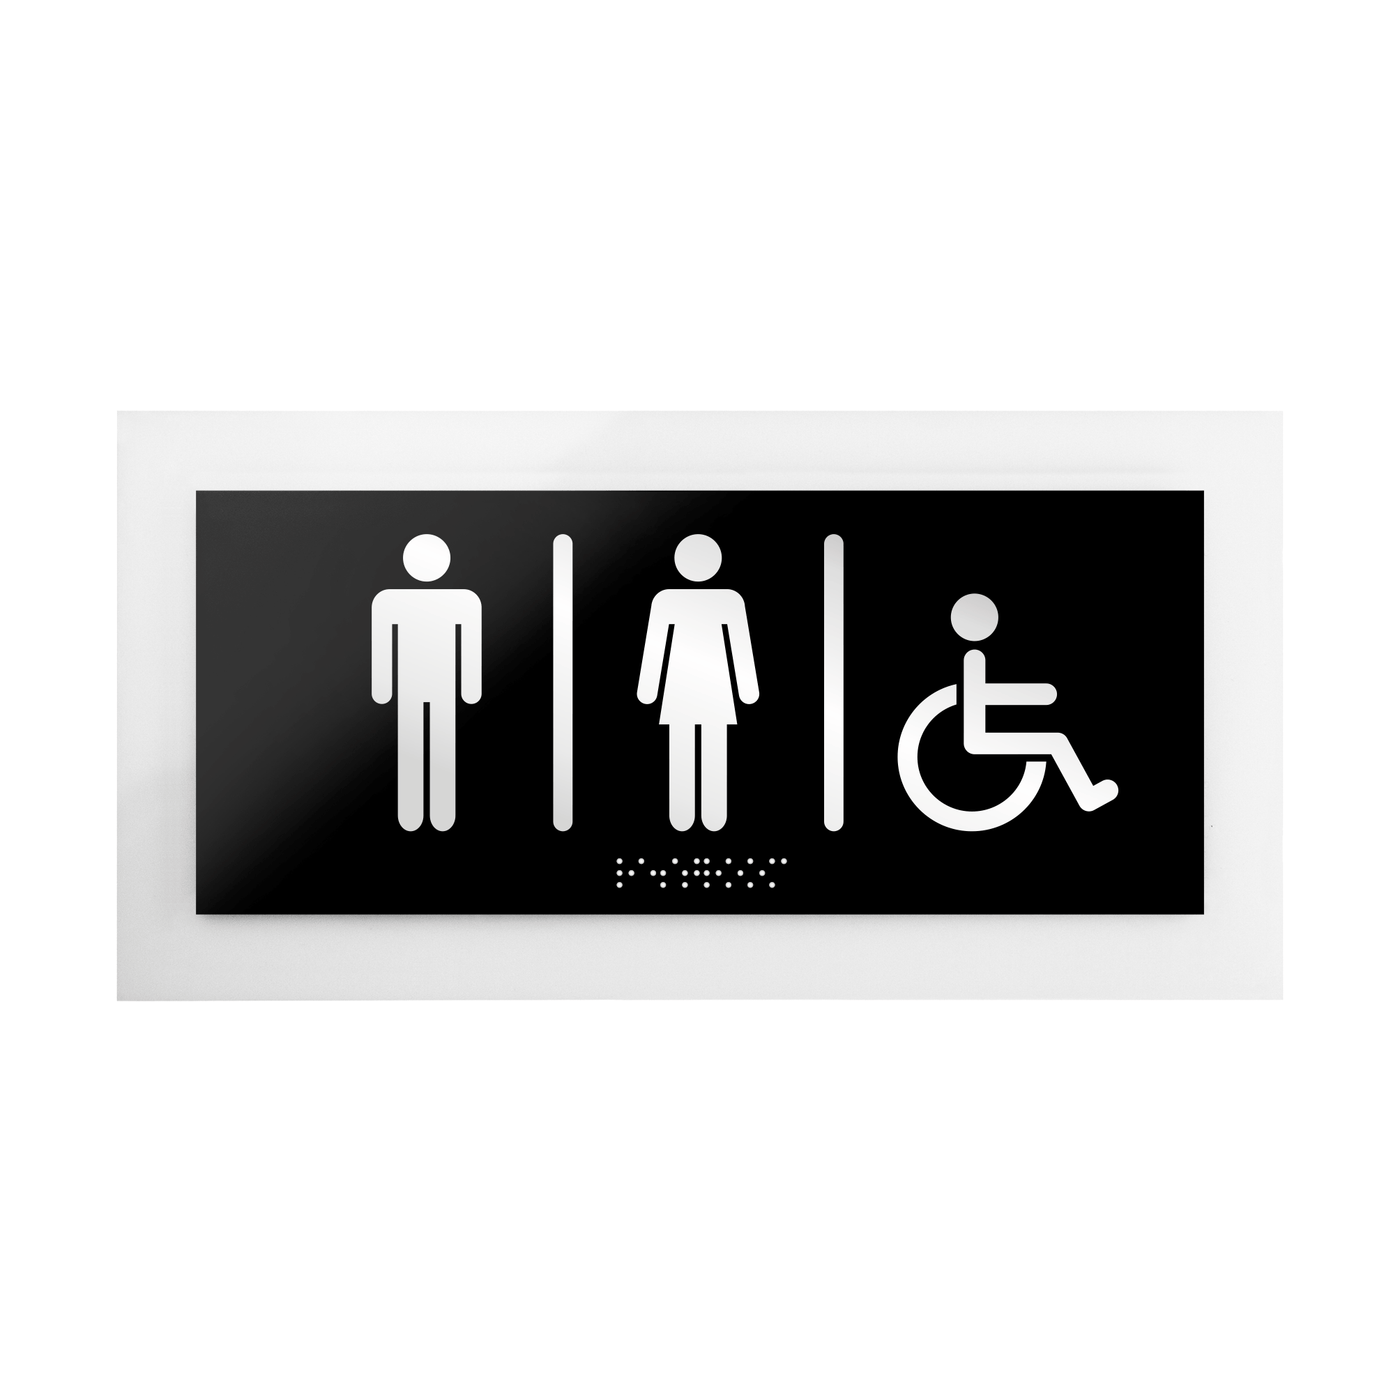 Acrylic Unisex Restroom Sign "Simple" Design